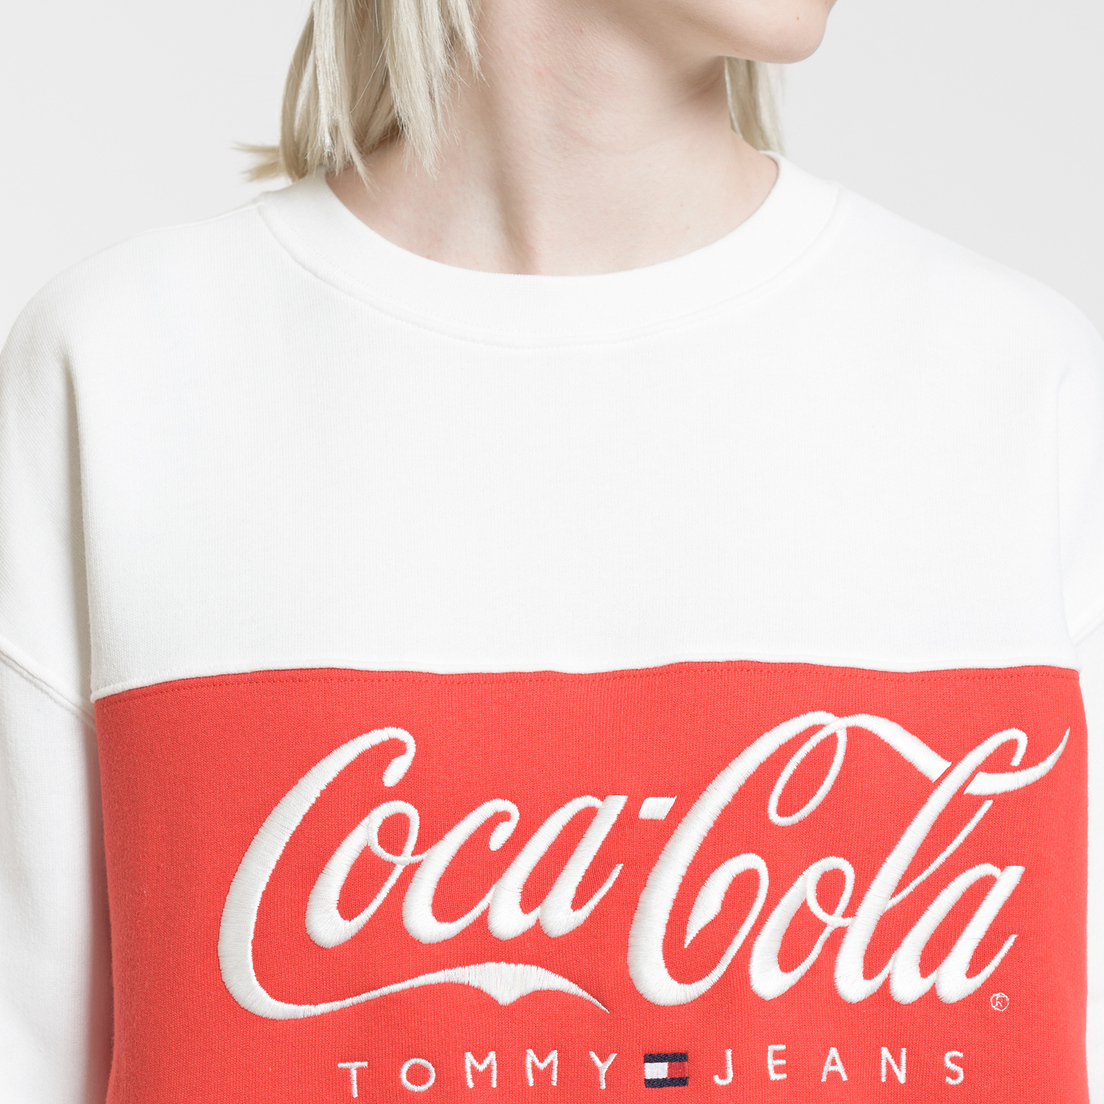 Tommy Jeans Женская толстовка x Coca-Cola Logo Crew